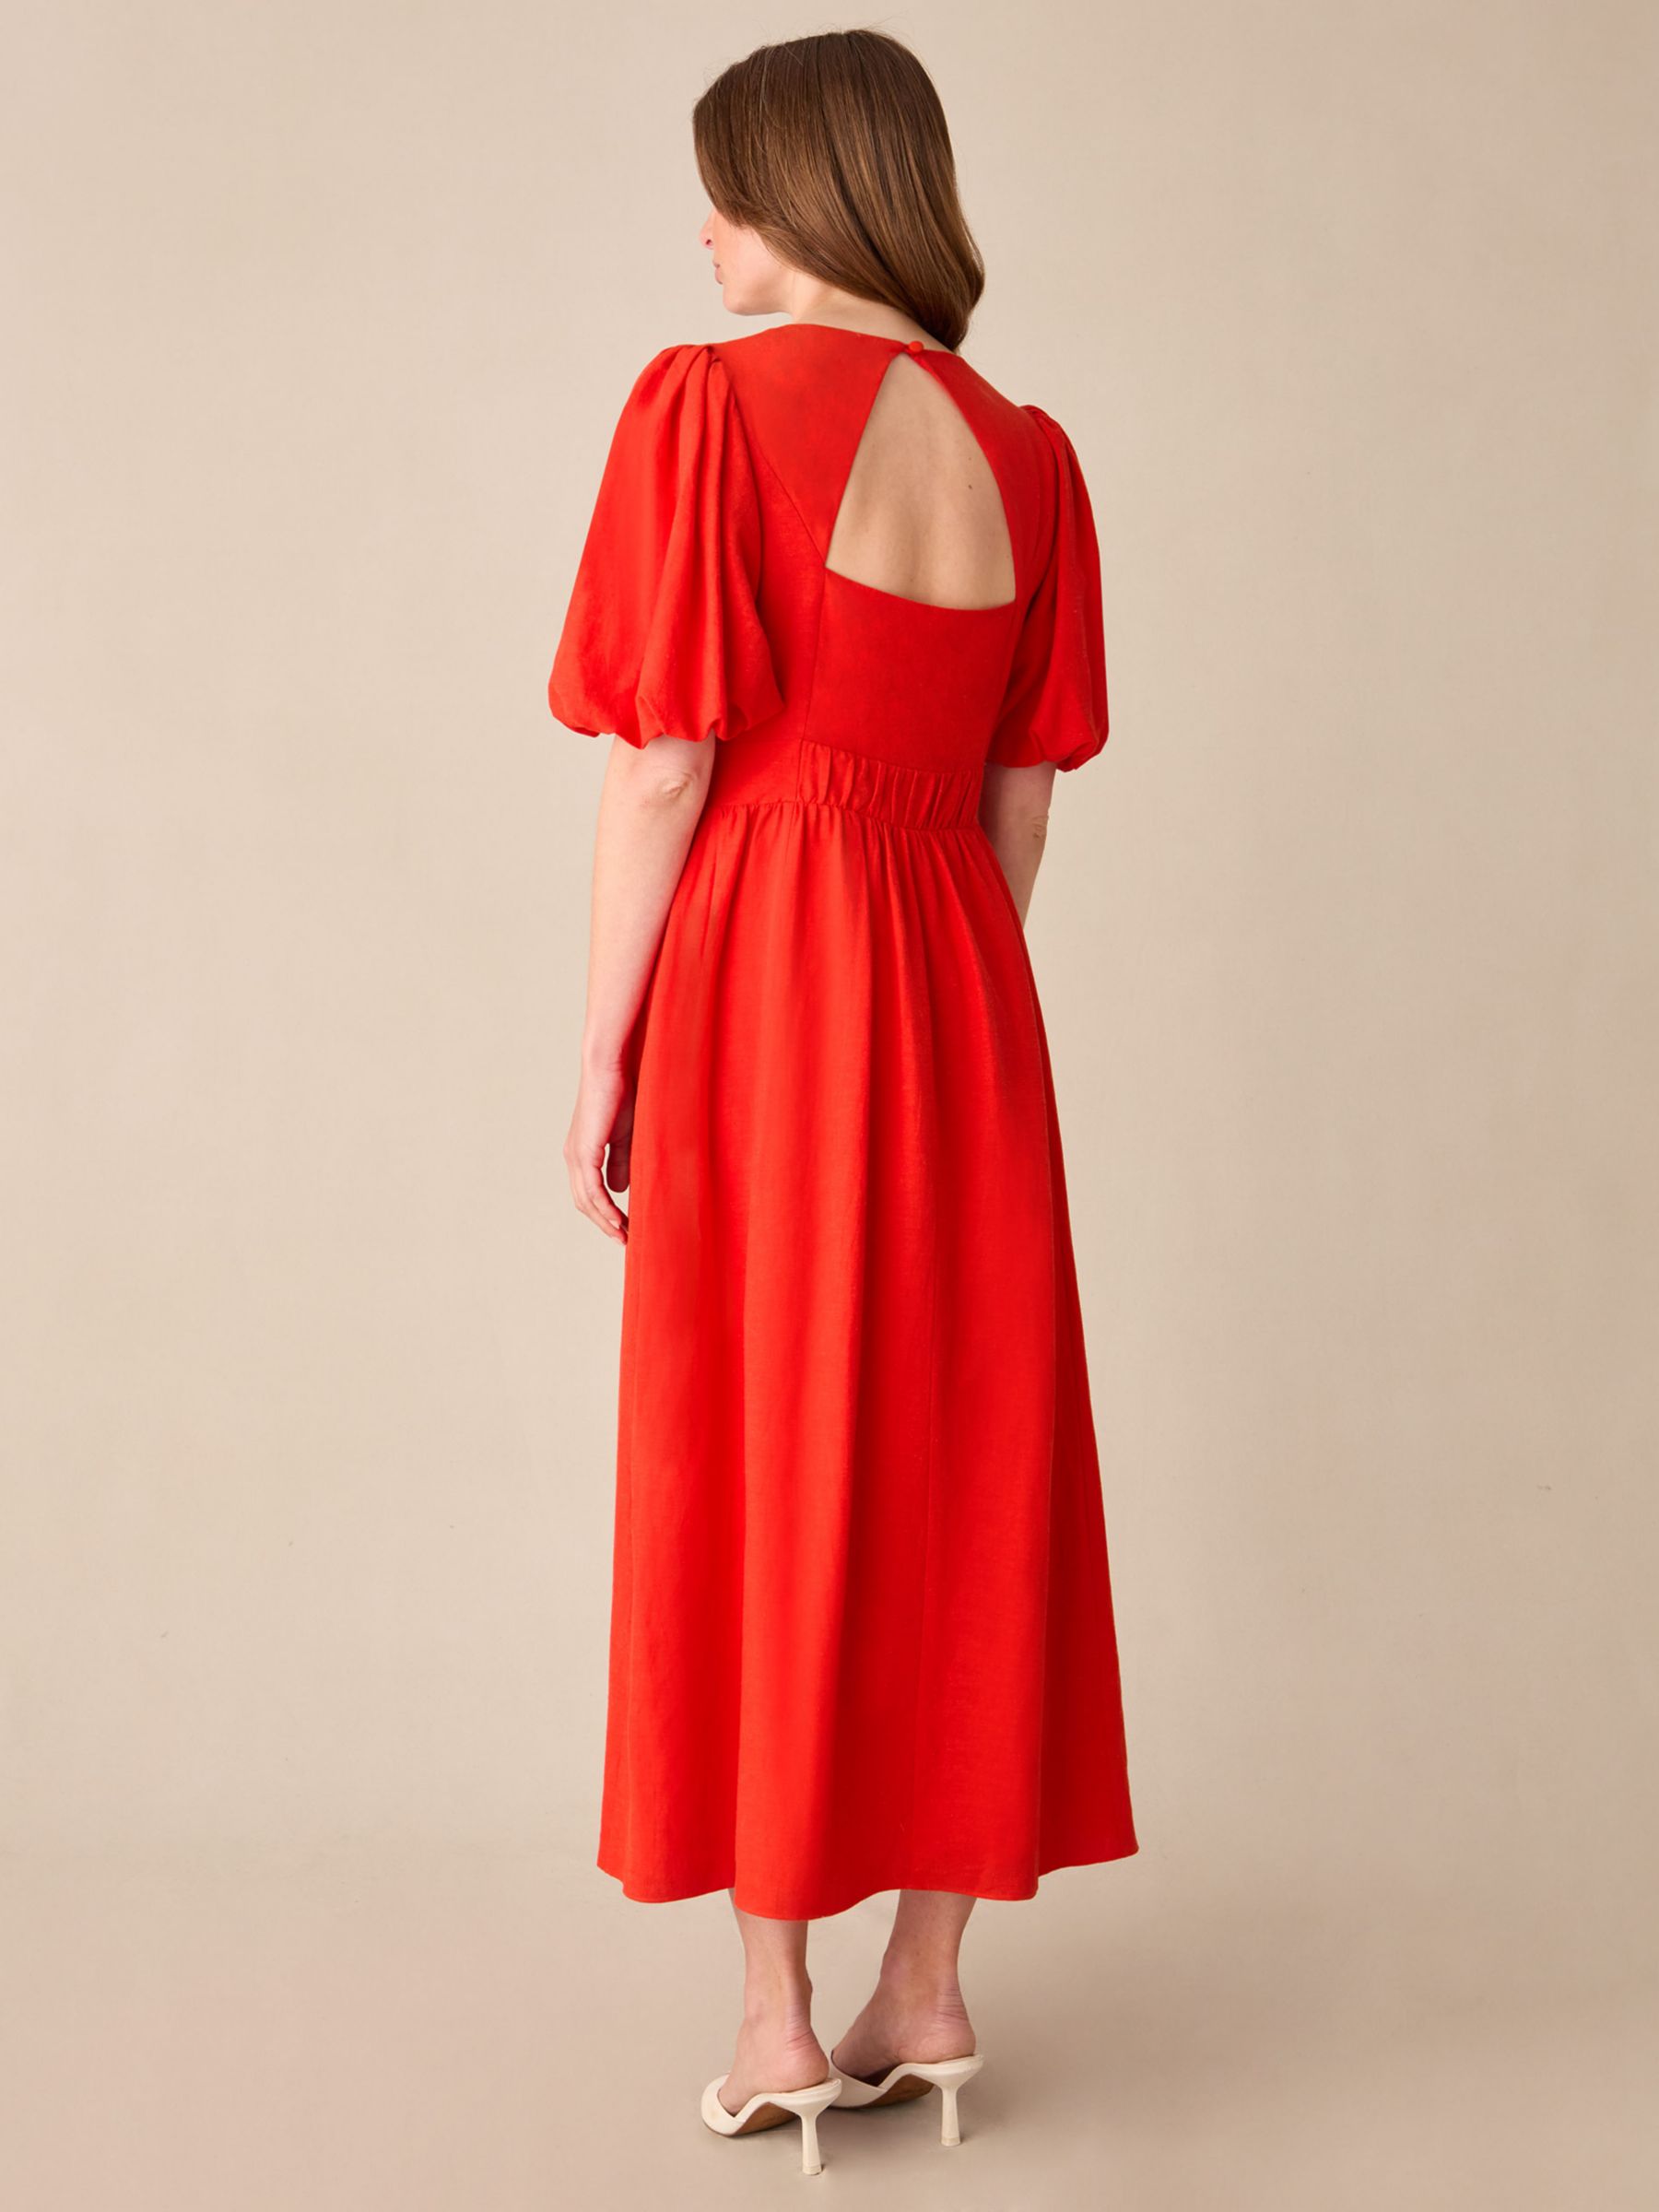 Ro&Zo Petite Red Puff Sleeve V Neck Midi Dress, Red, 6